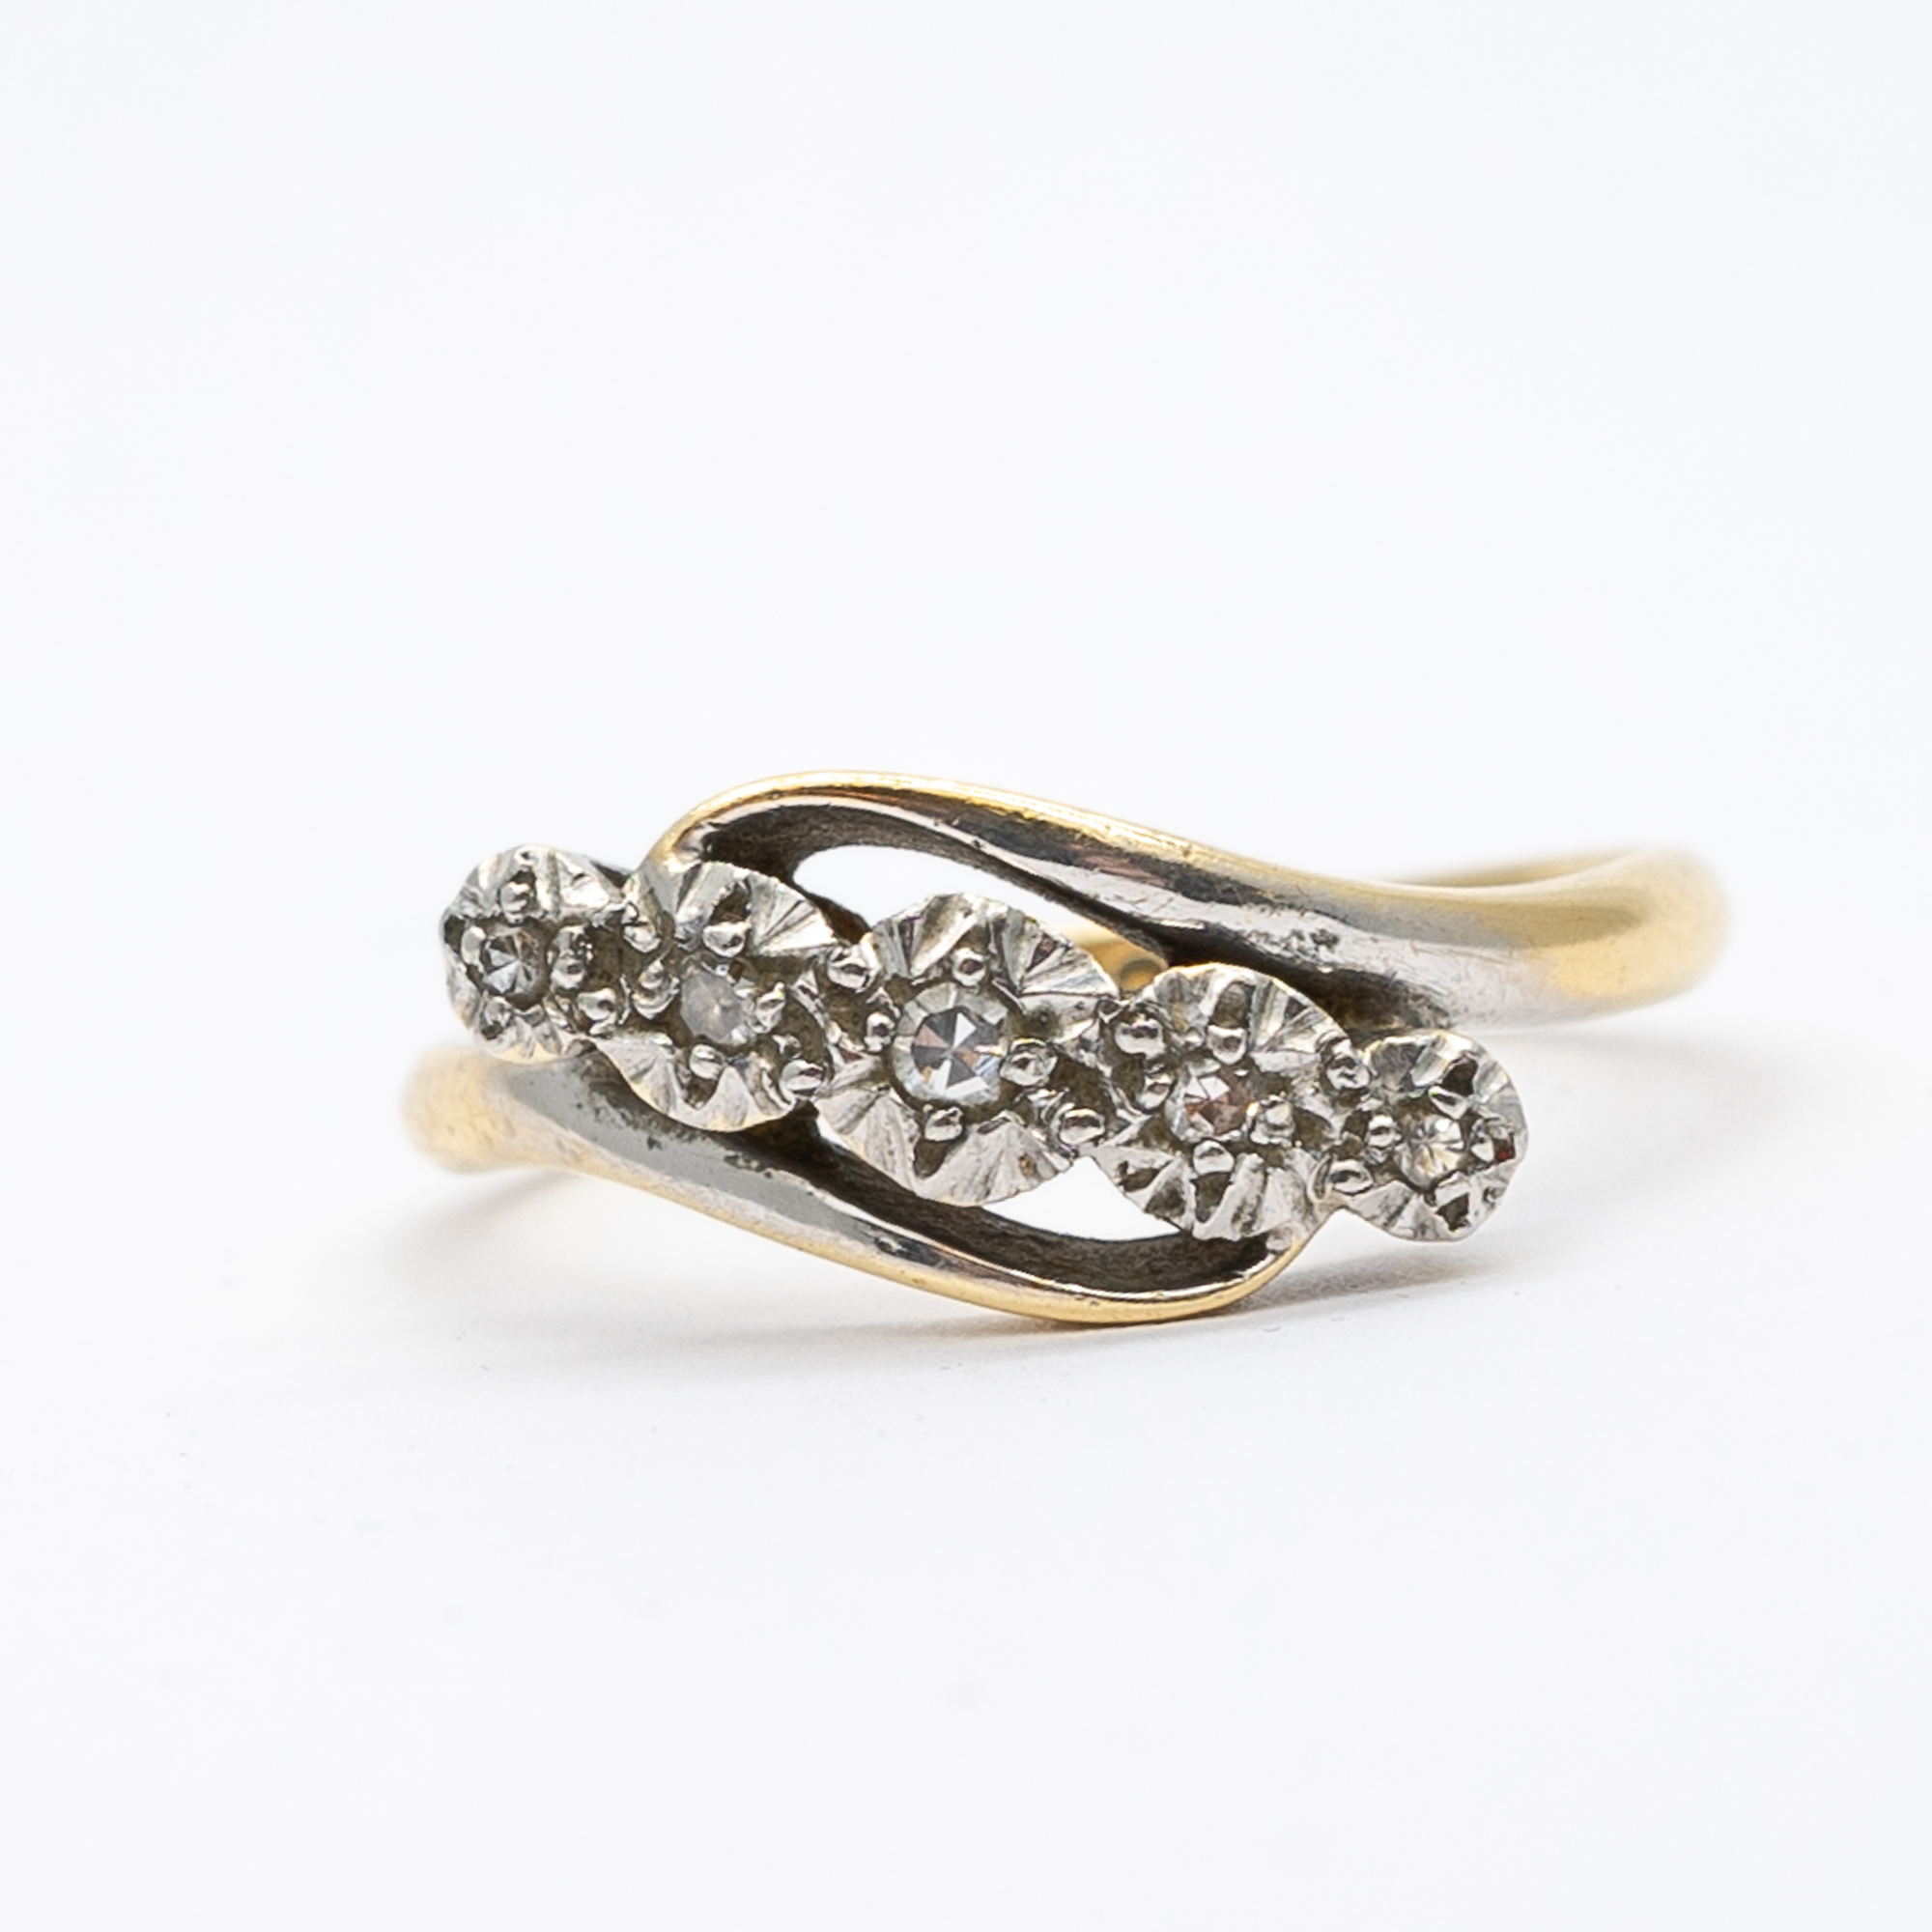 A vintage 18ct yellow gold and platinum 5 stone diamond twist ring